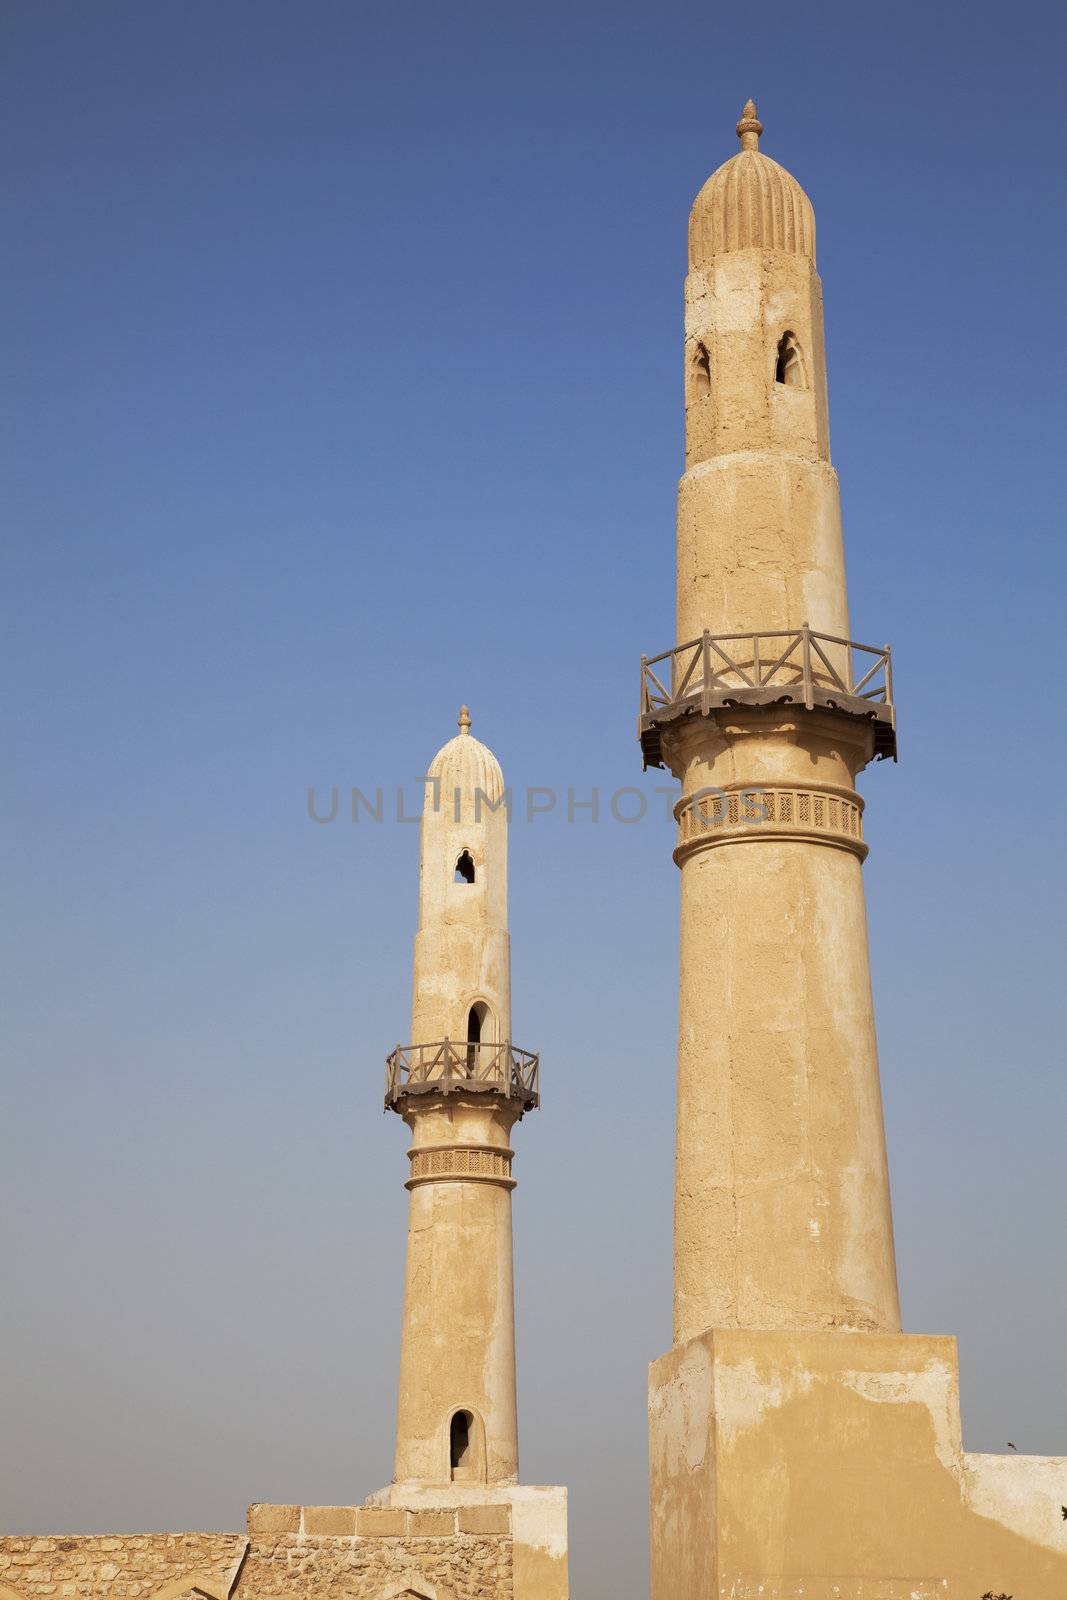 Image of minarets of the ancient Khamis mosque, Bahrain.
